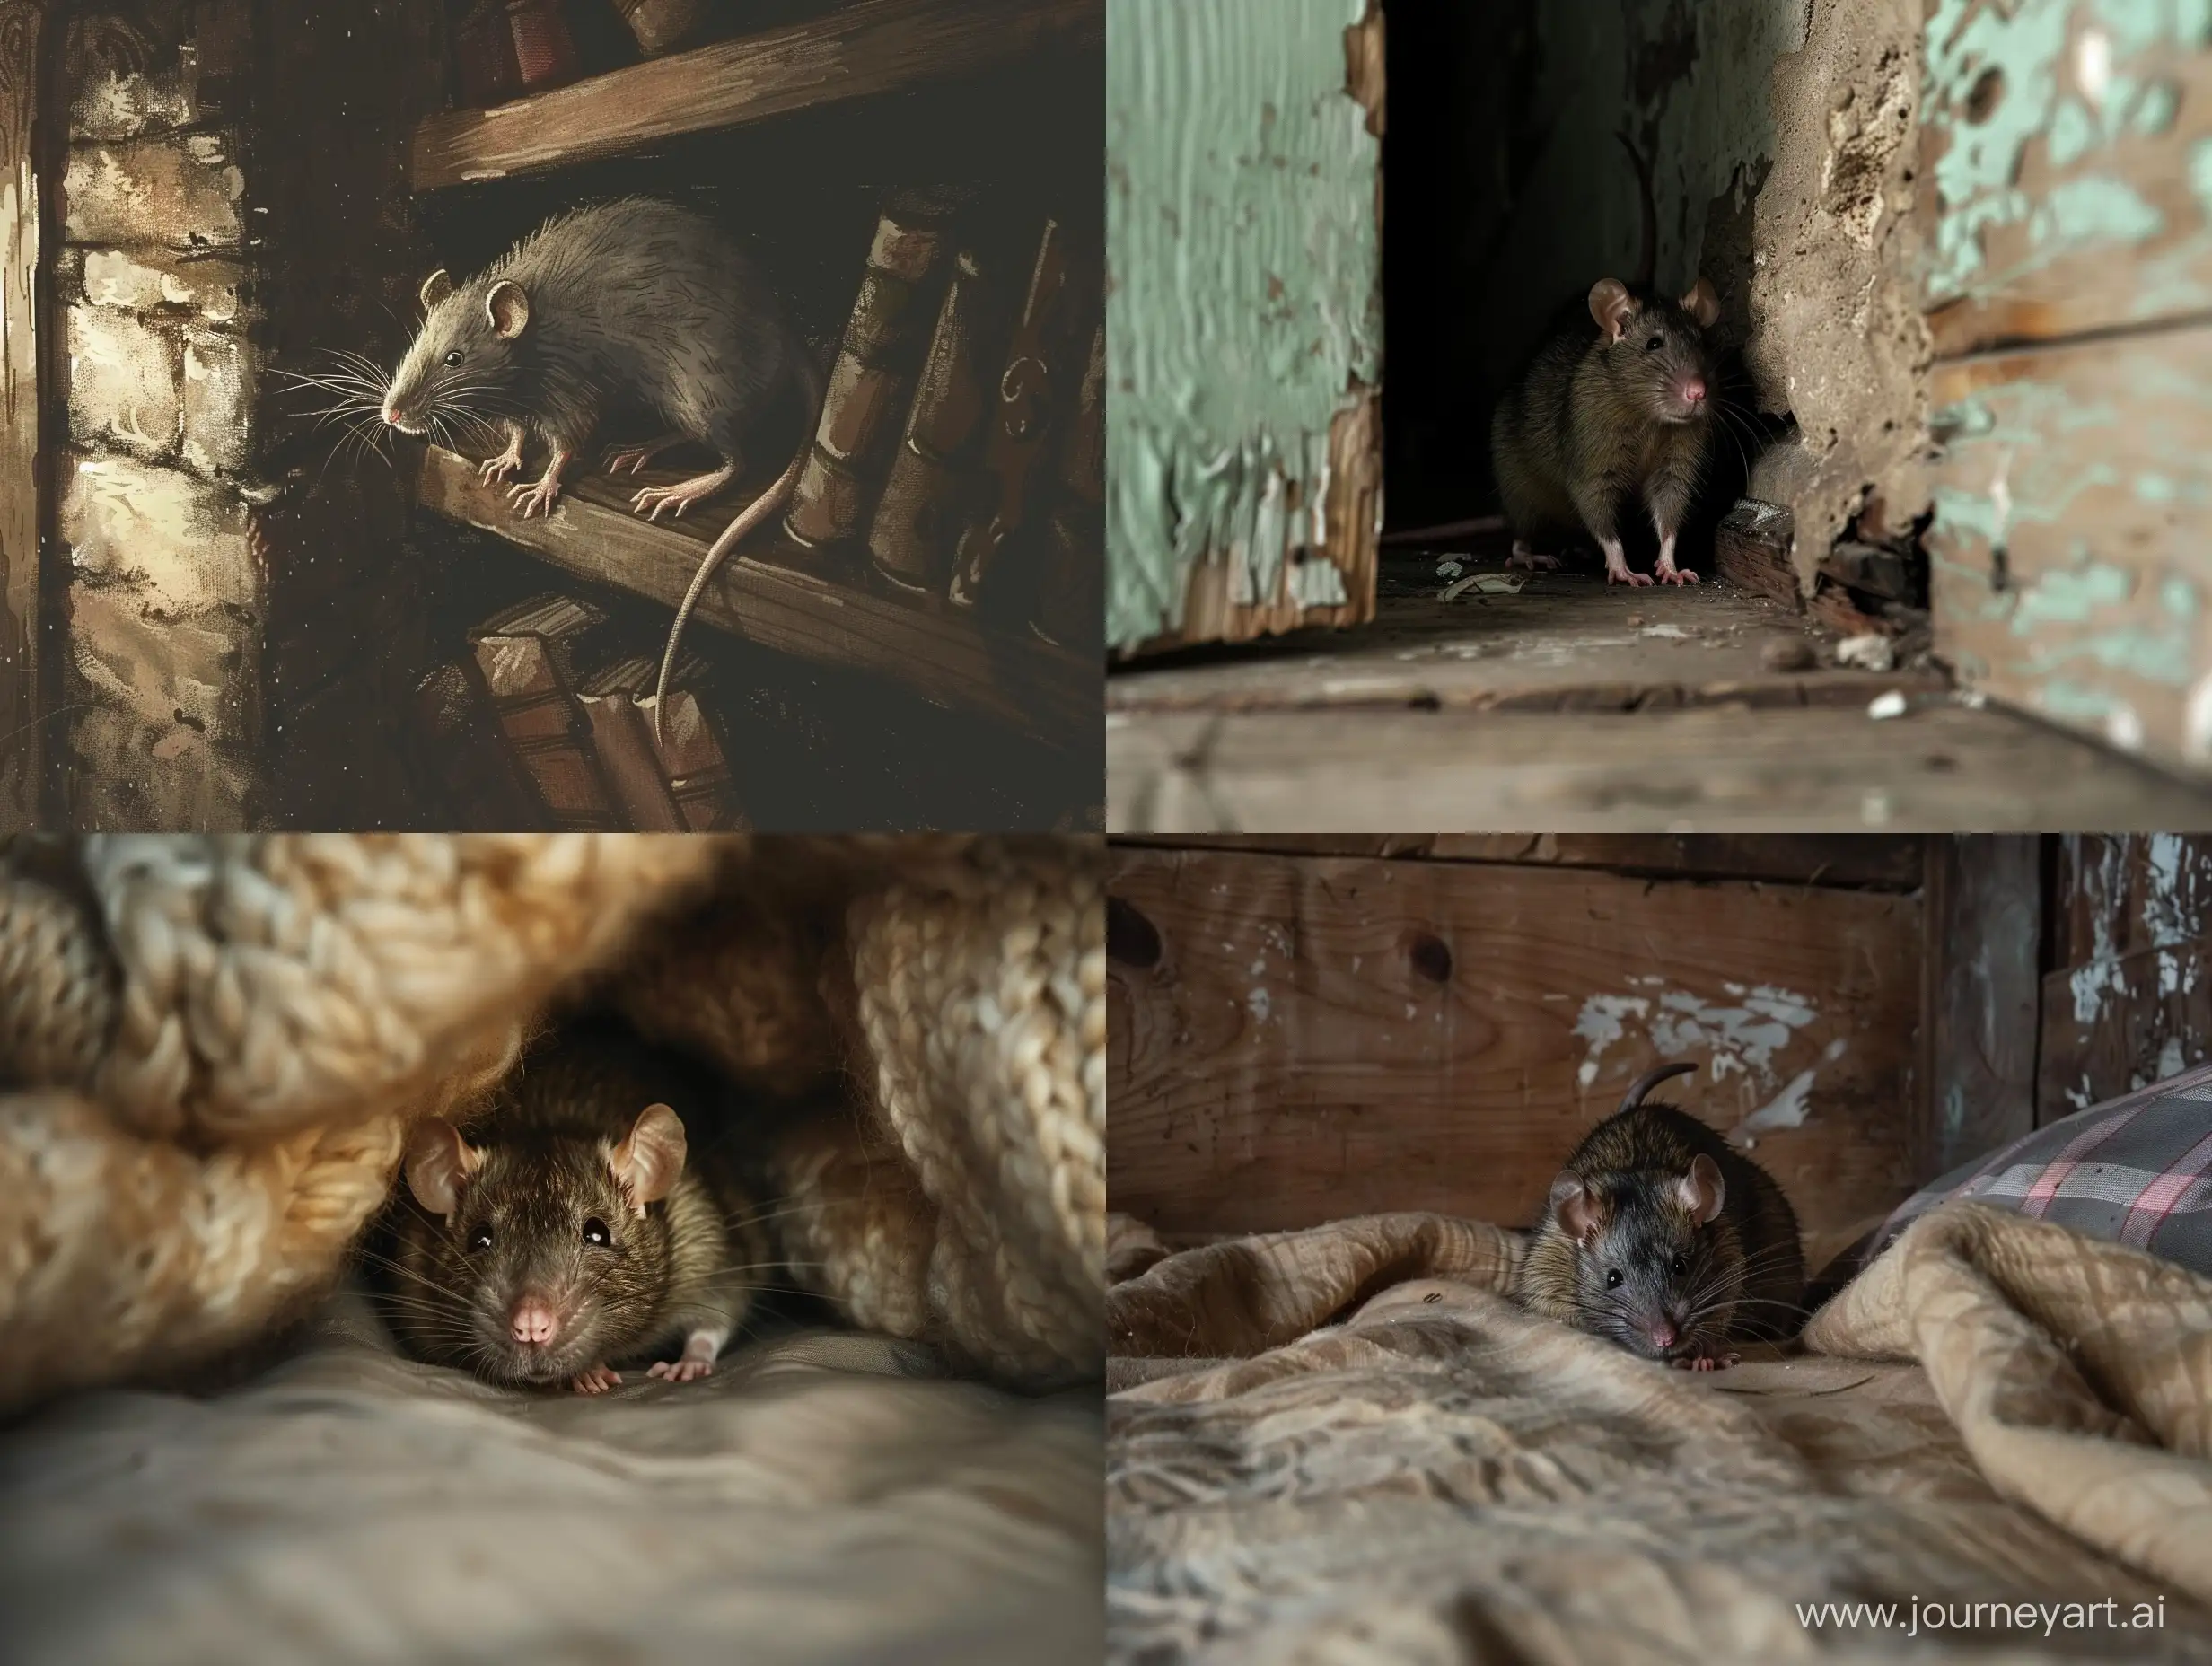 Menacing-Rats-Running-in-Dimly-Lit-Room